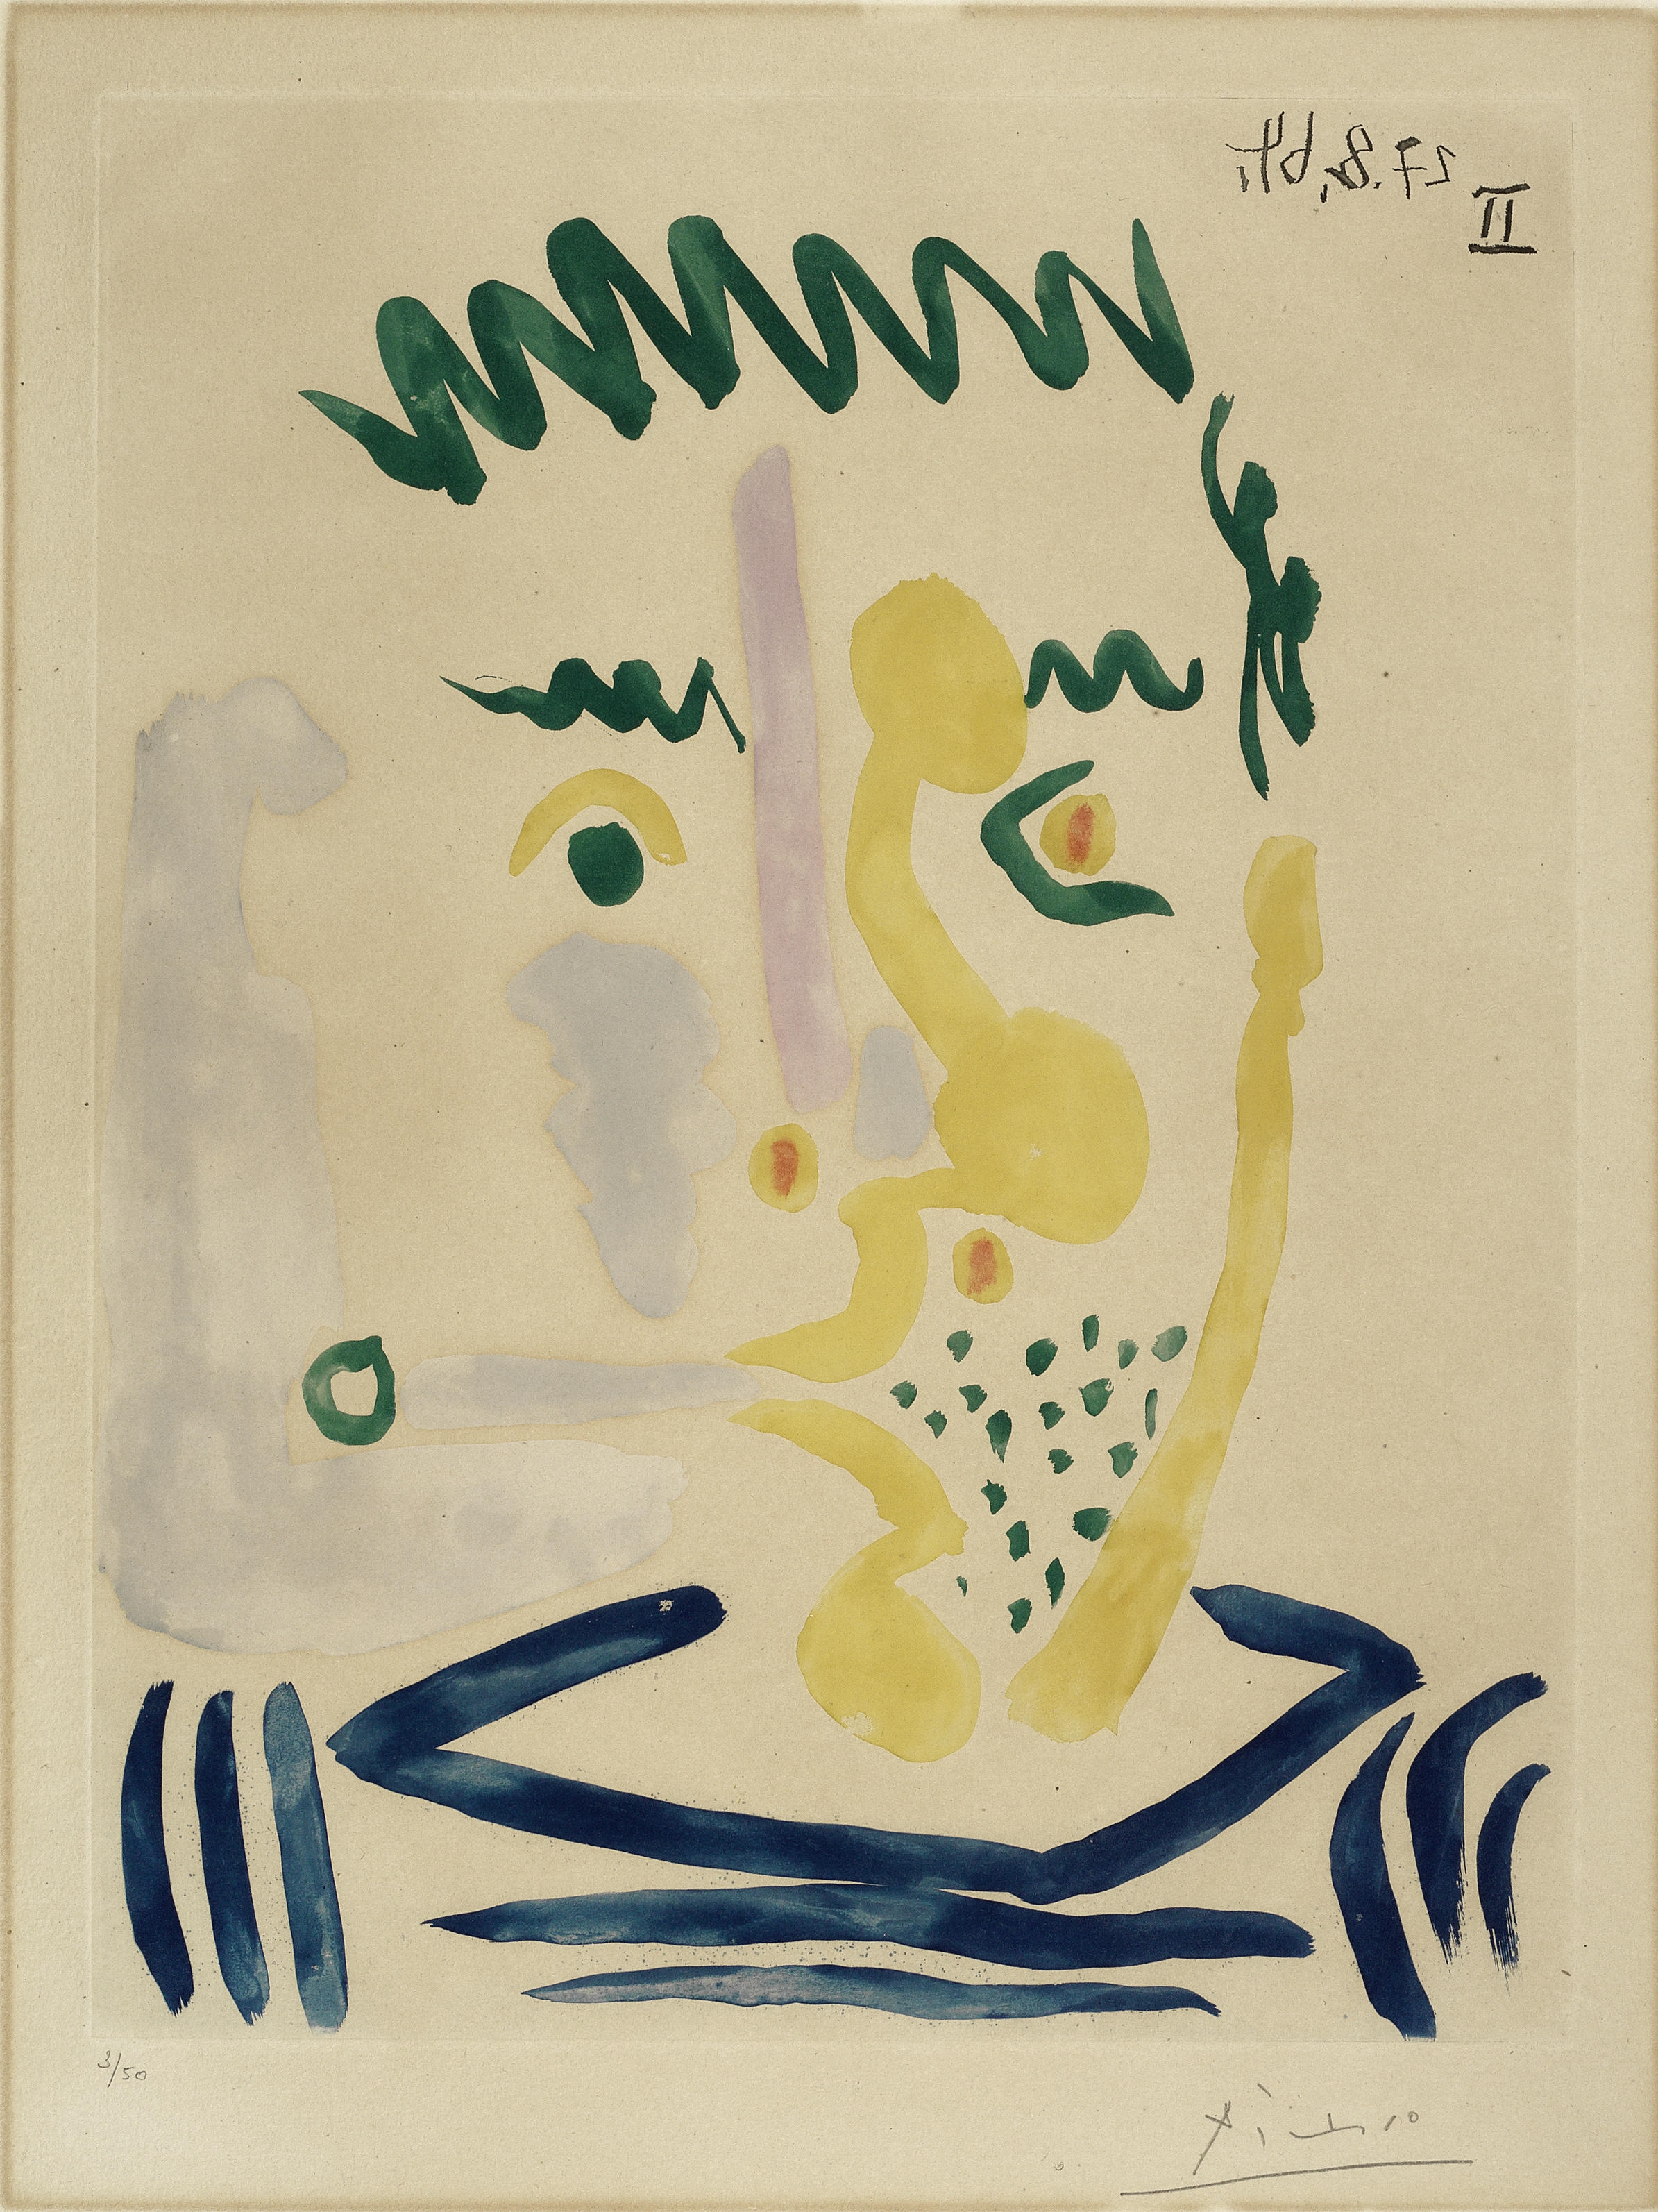 Fumeur Barbu by Pablo Picasso, 1964